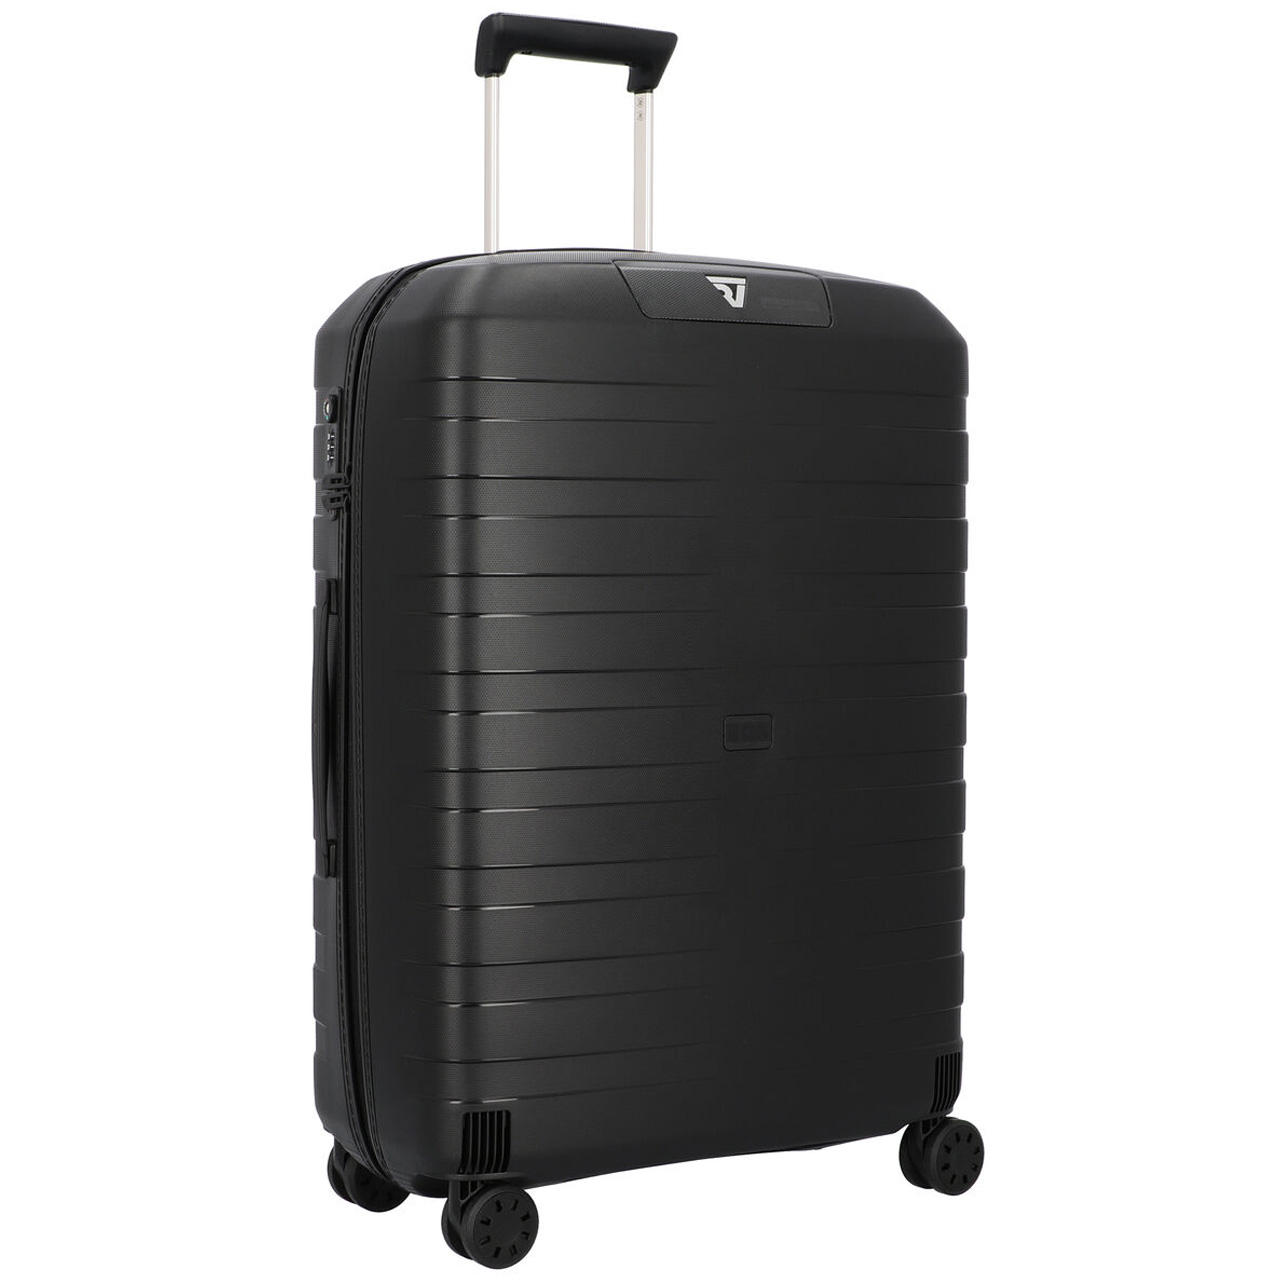 کیف-ساک-چمدان مسافرتی -لوازم سفر- چمدان رونکاتو مدل BOX EXP کد 700522 سایز متوسط